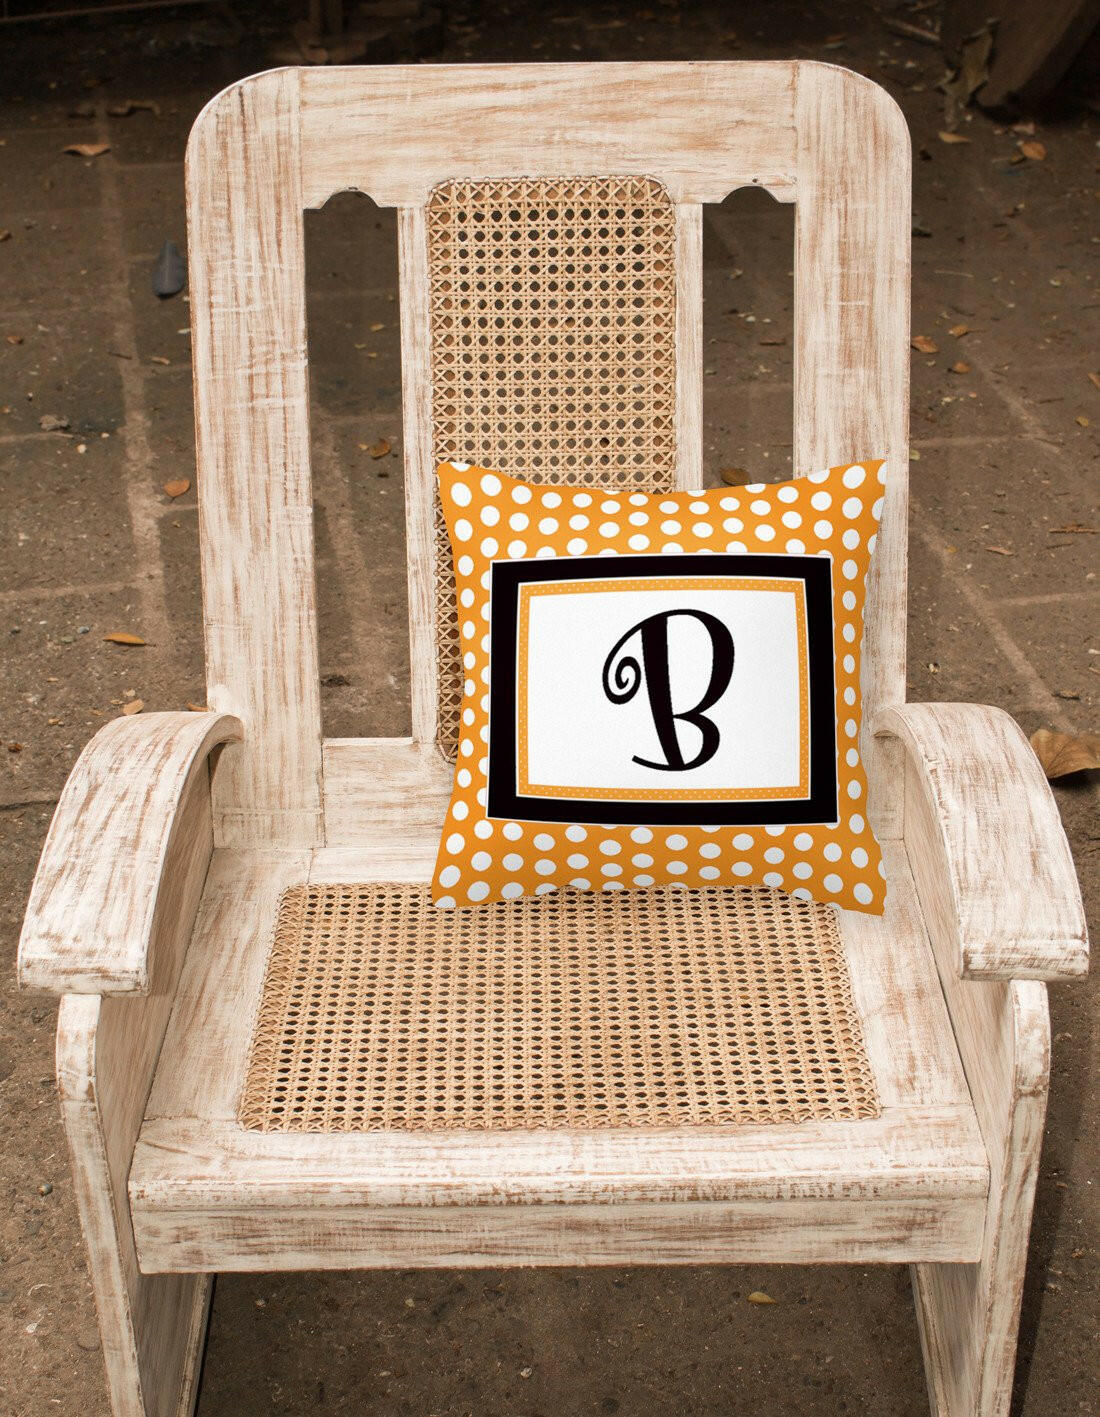 Monogram Initial B Orange Polkadots Decorative   Canvas Fabric Pillow CJ1033 - the-store.com